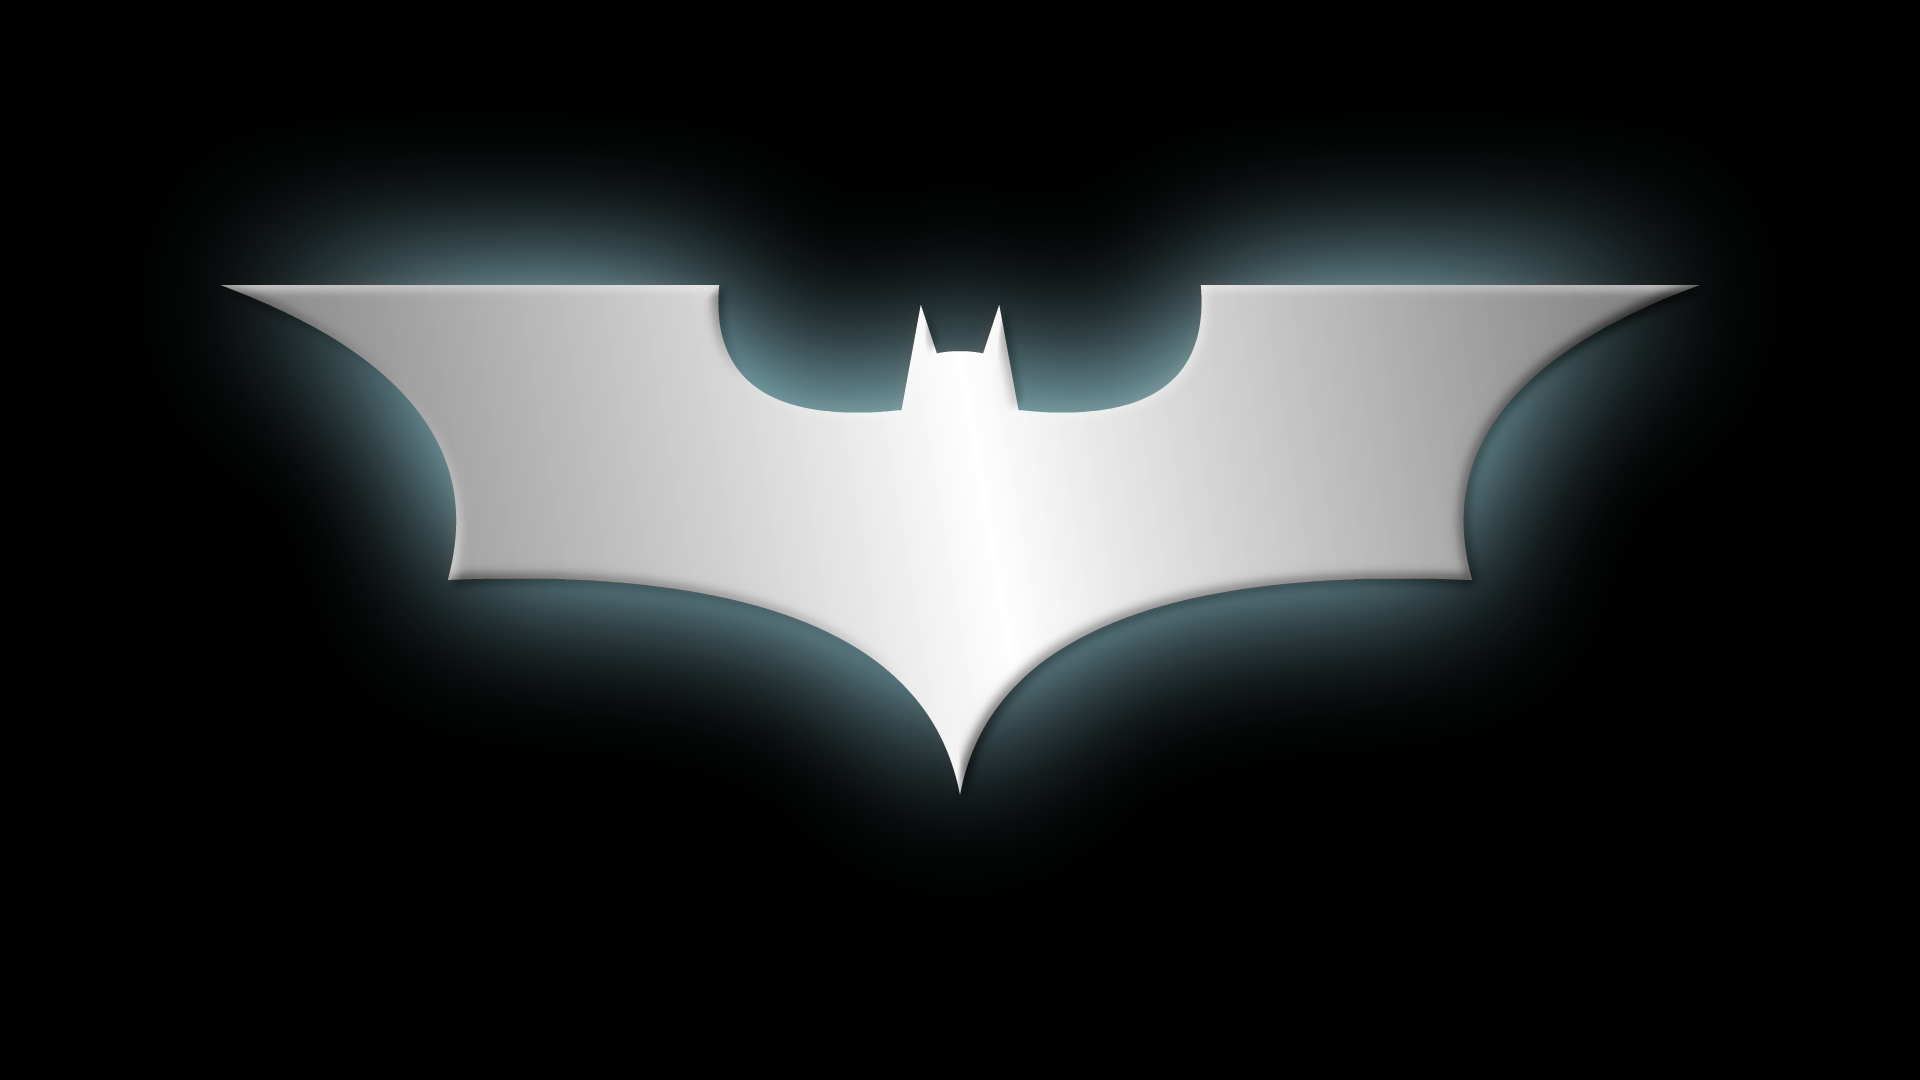 Dark Knight Symbol By Yurtigo